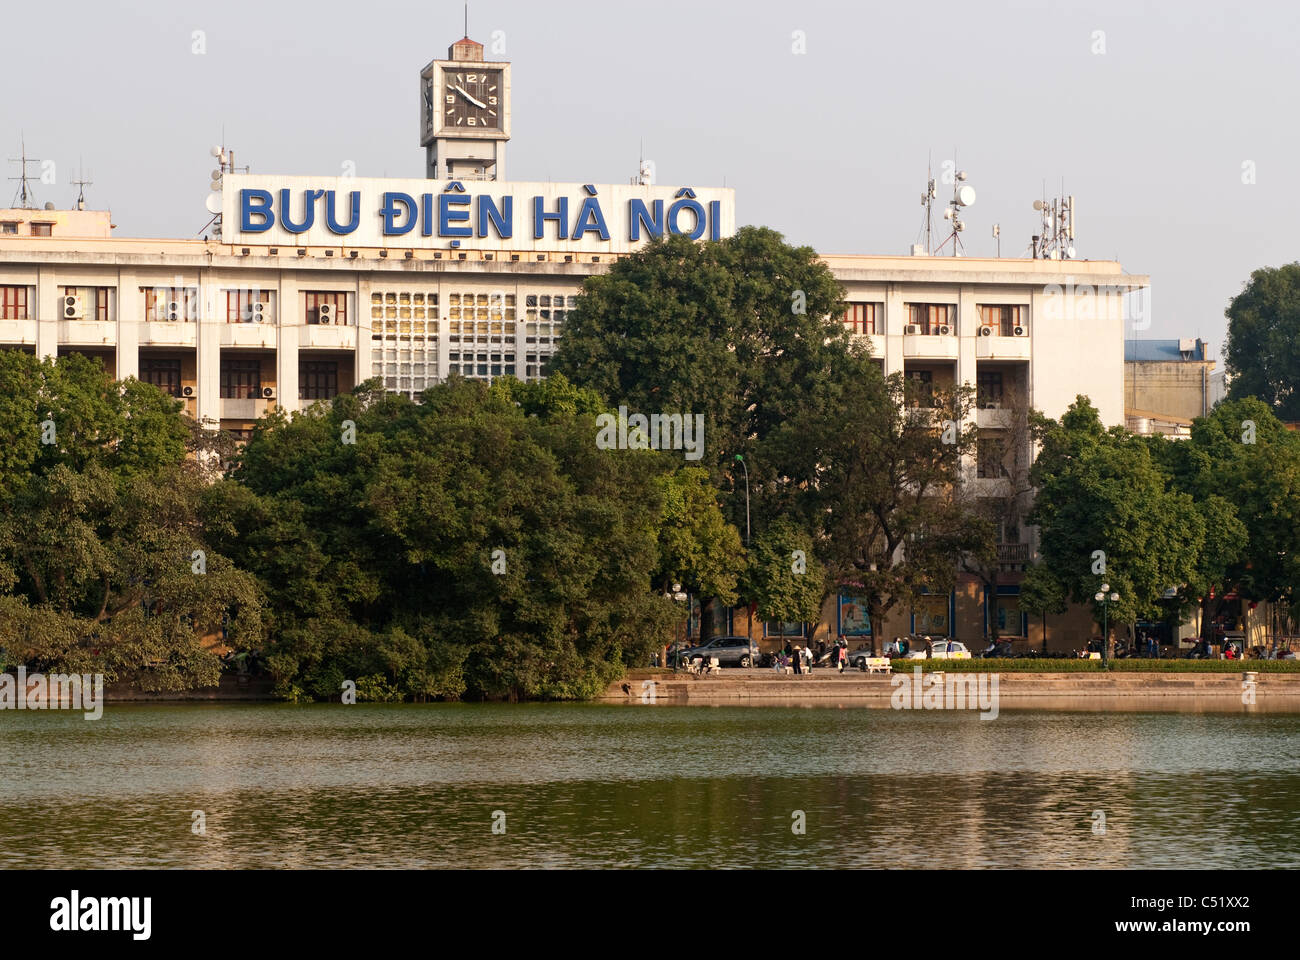 Hauptpost, Buu Dien, Hanoi, Vietnam Stockfoto